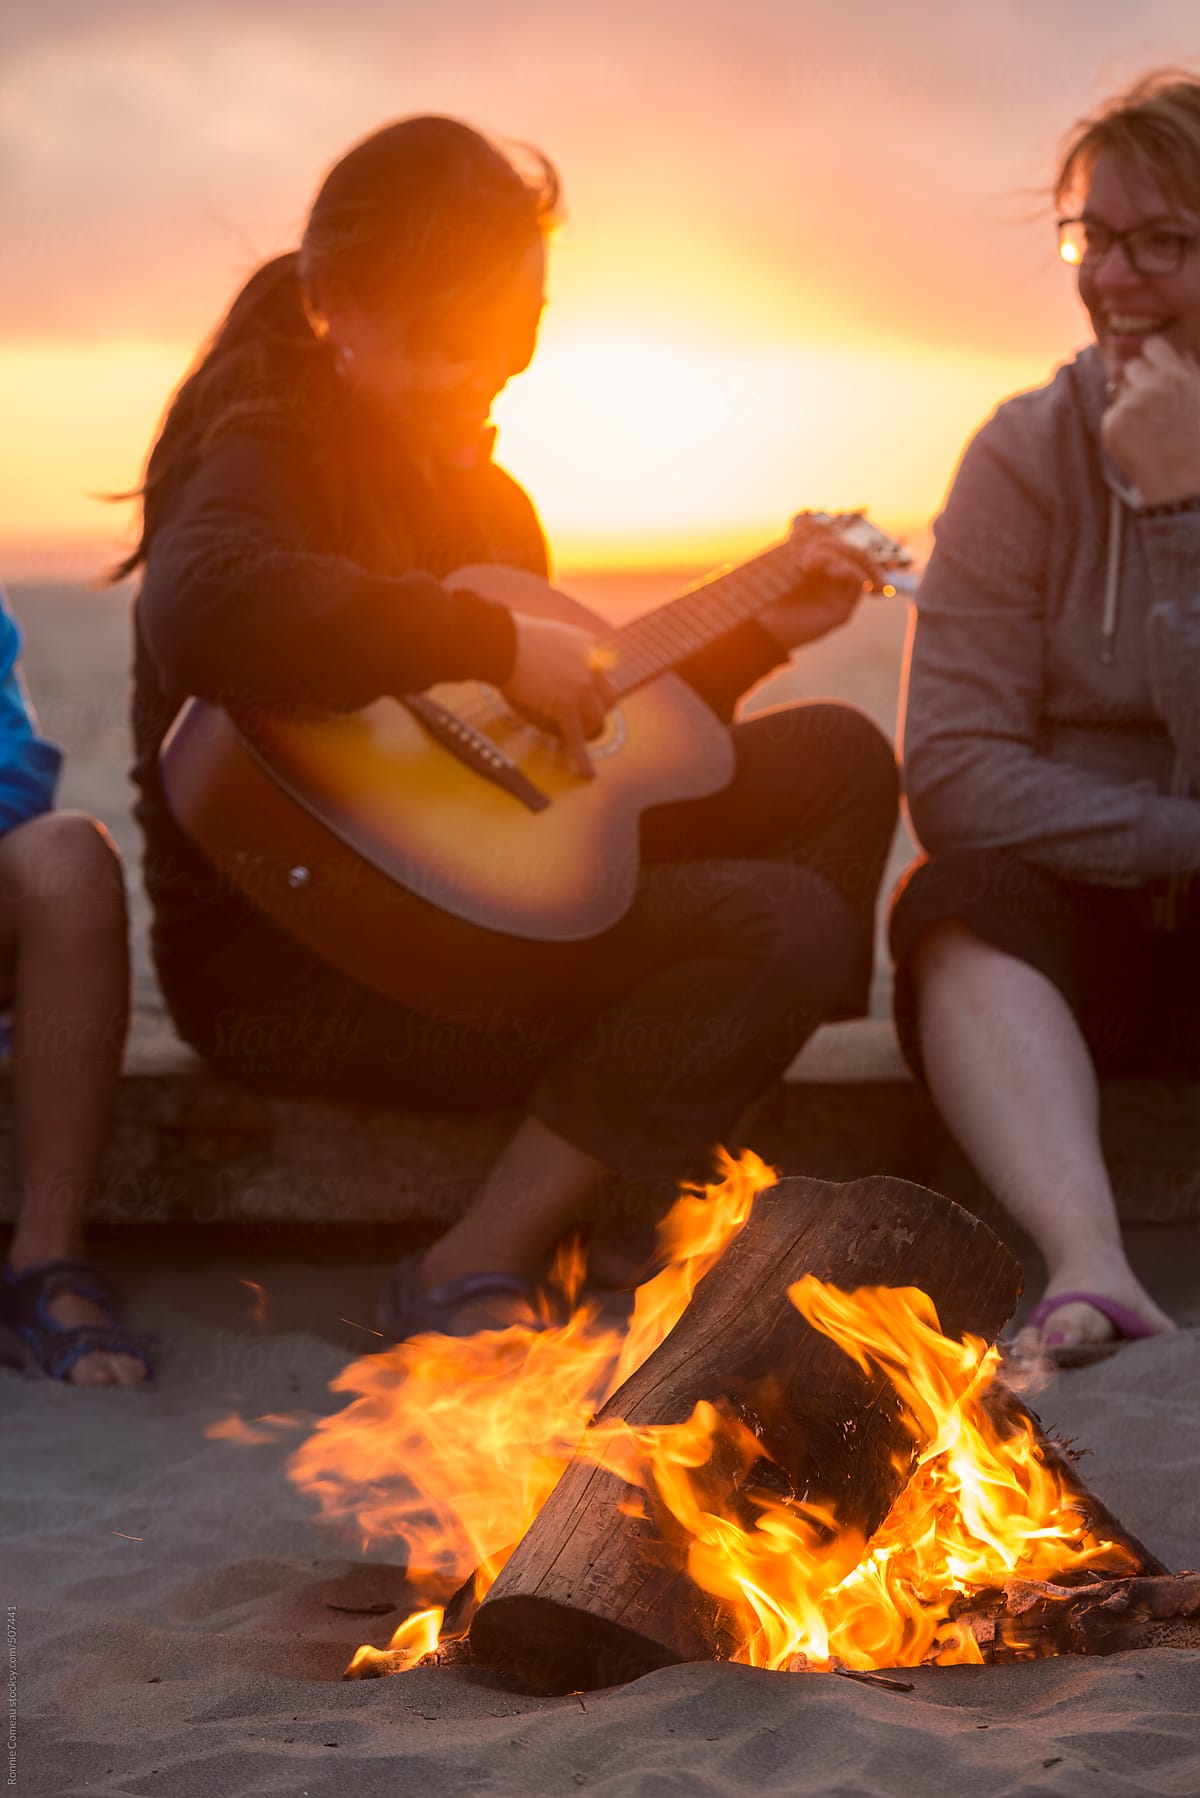 singing around the campfire